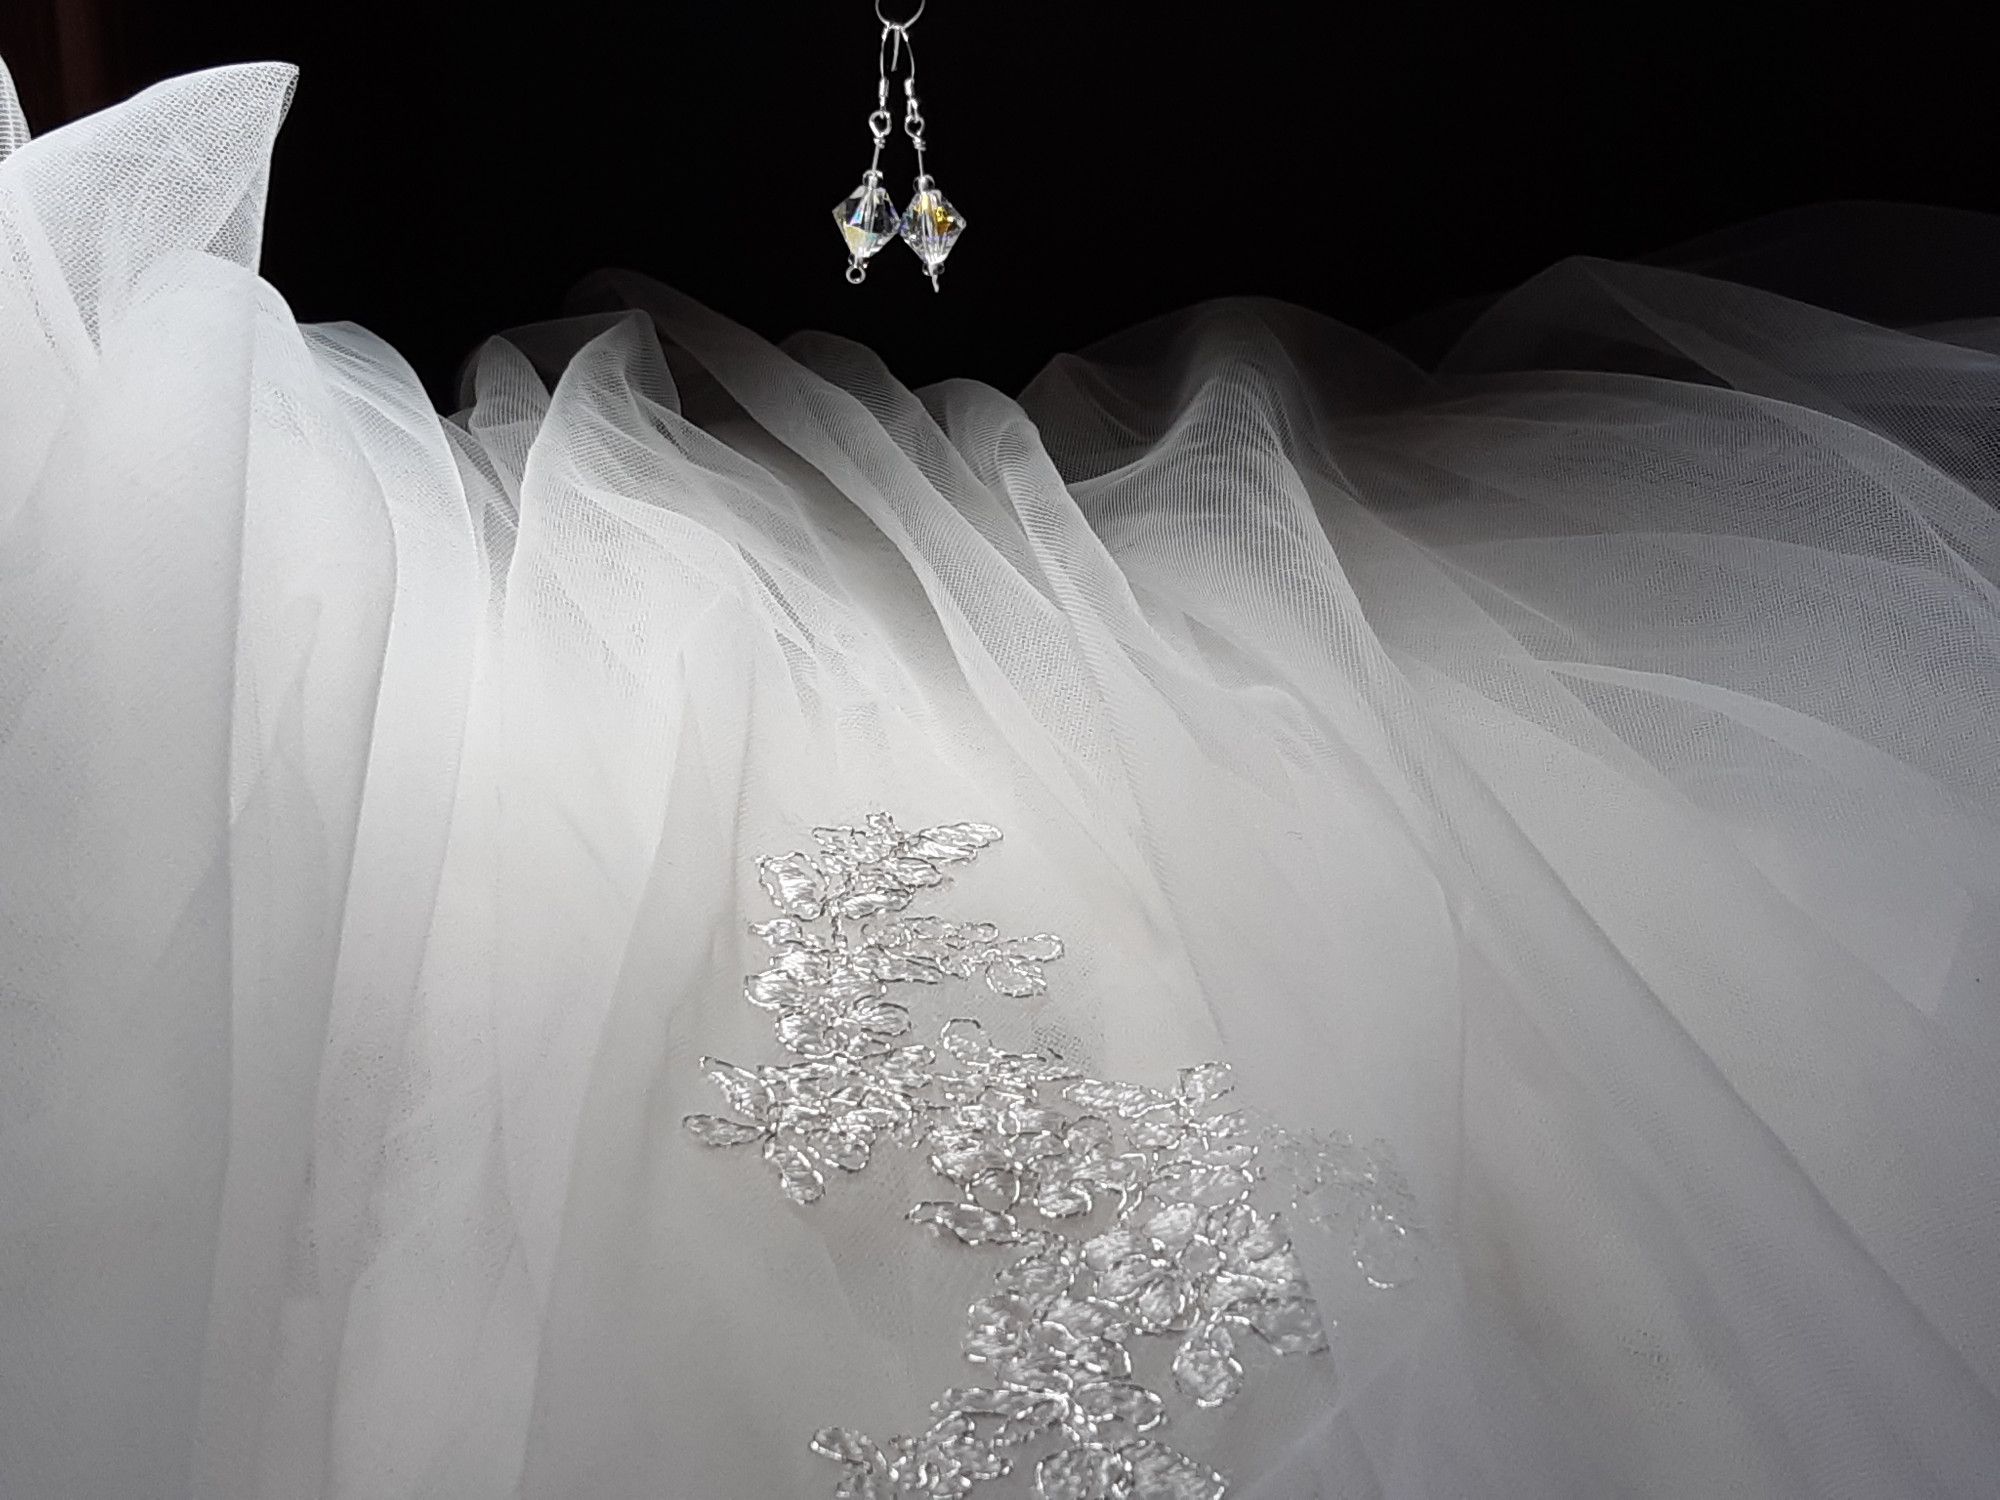 Occasion-wedding-swarovski crystal+sterling silver earrings-6.jpg